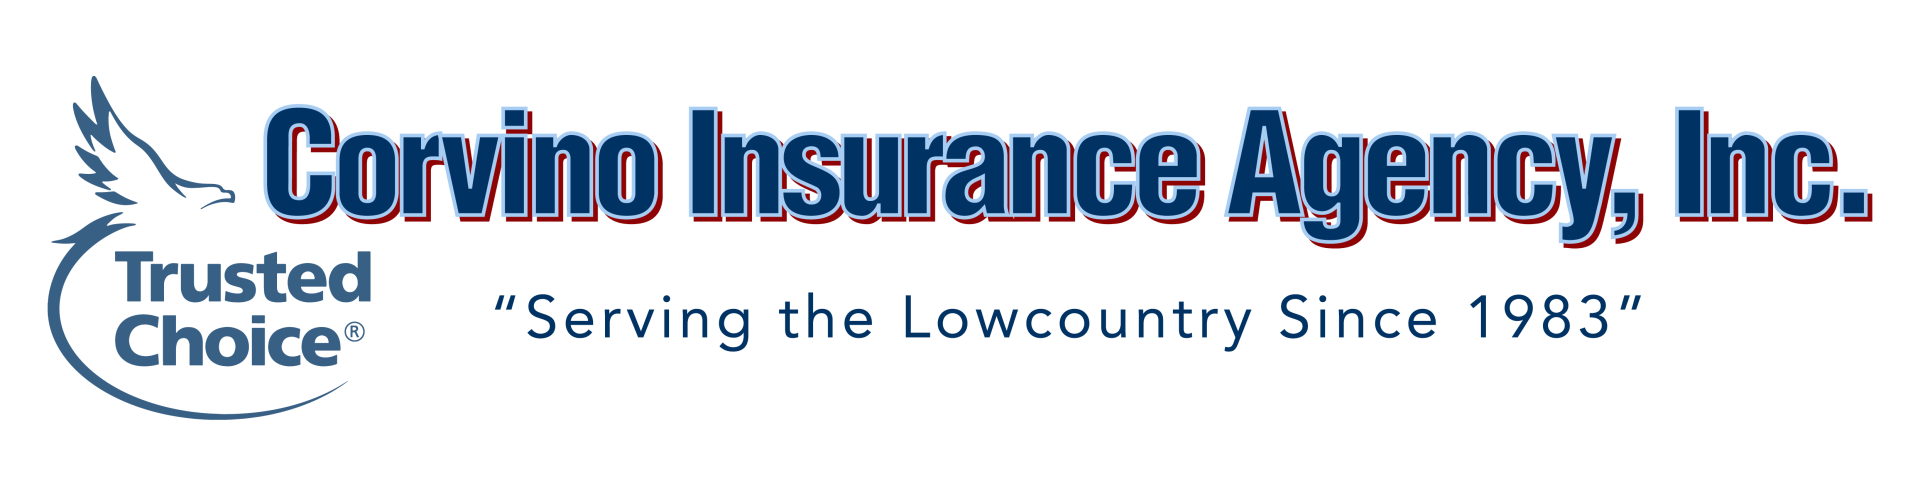 Corvino Insurance Agency, Inc.